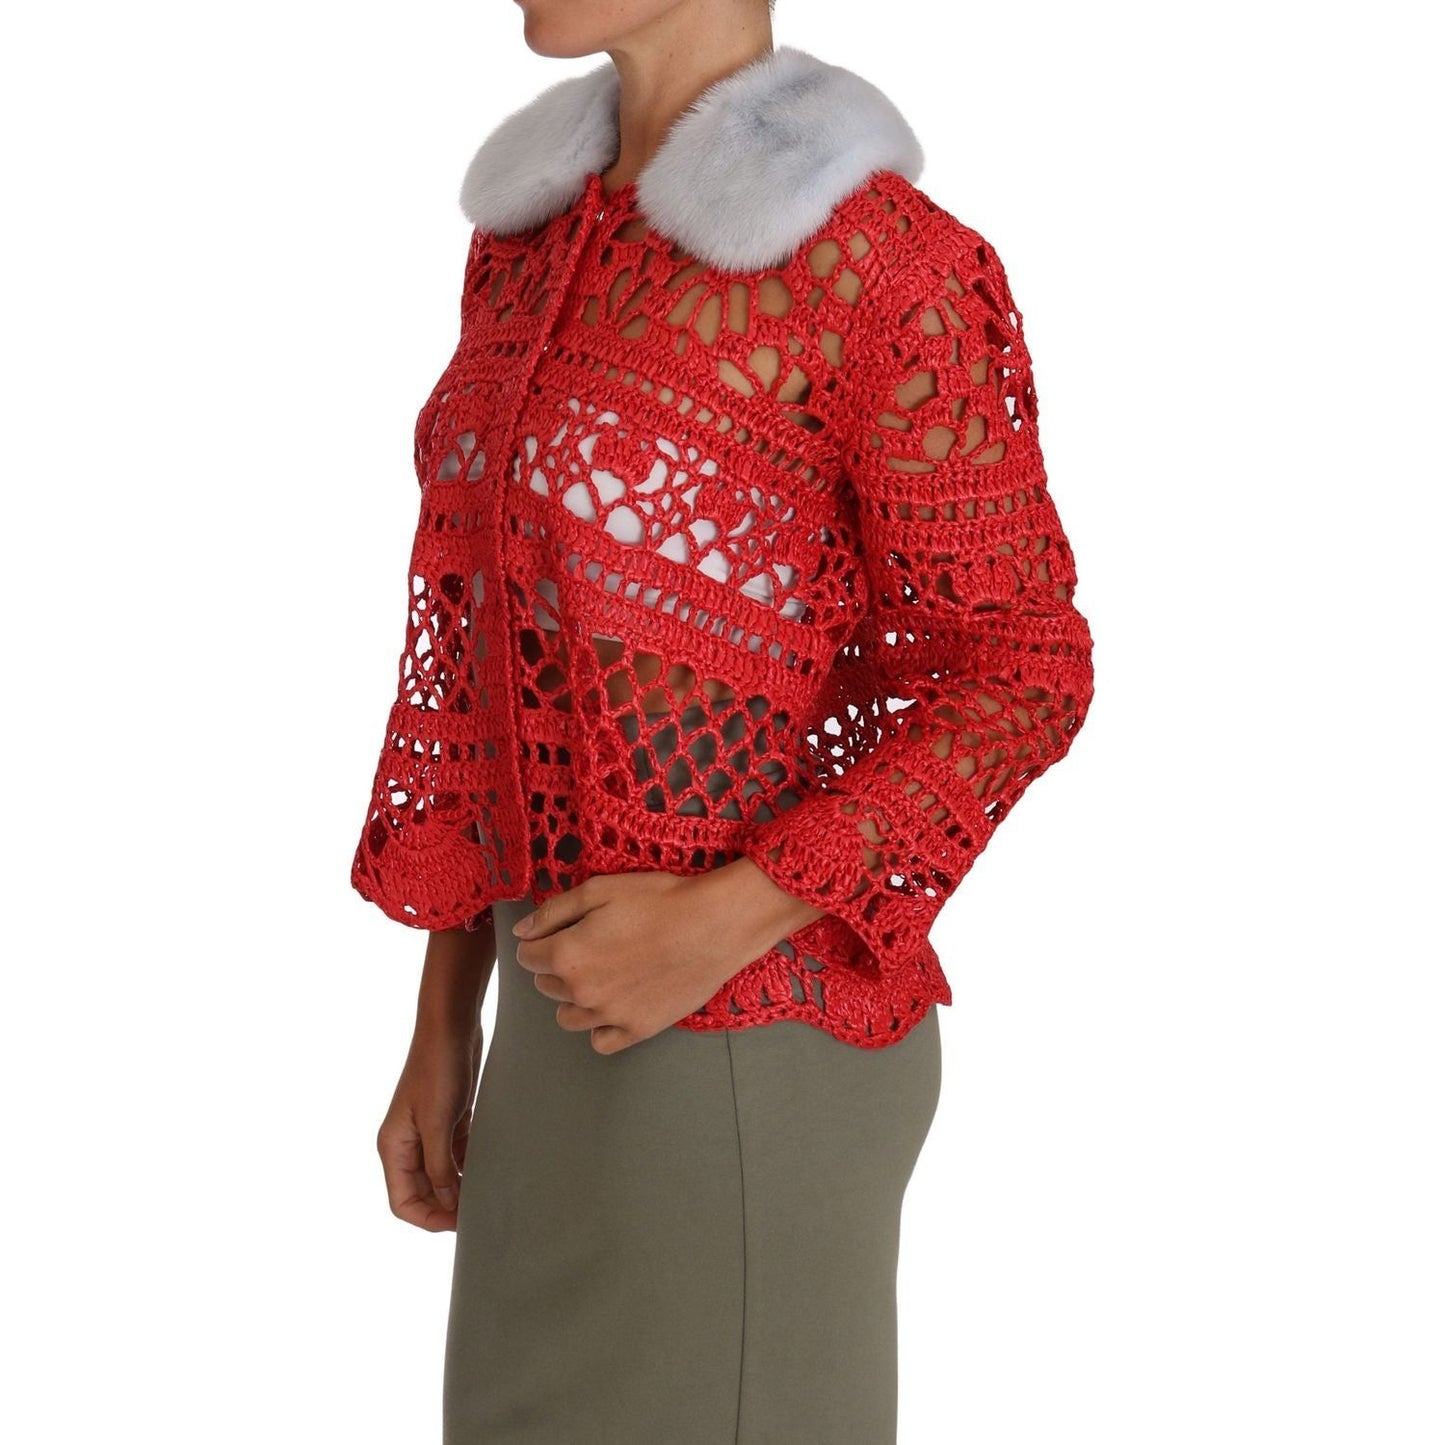 Dolce & Gabbana Elegant Red Crochet Knit Cardigan with Fur Collar red-cardigan-crochet-knit-raffia-sweater 648775-red-cardigan-crochet-knit-raffia-sweater-3.jpg